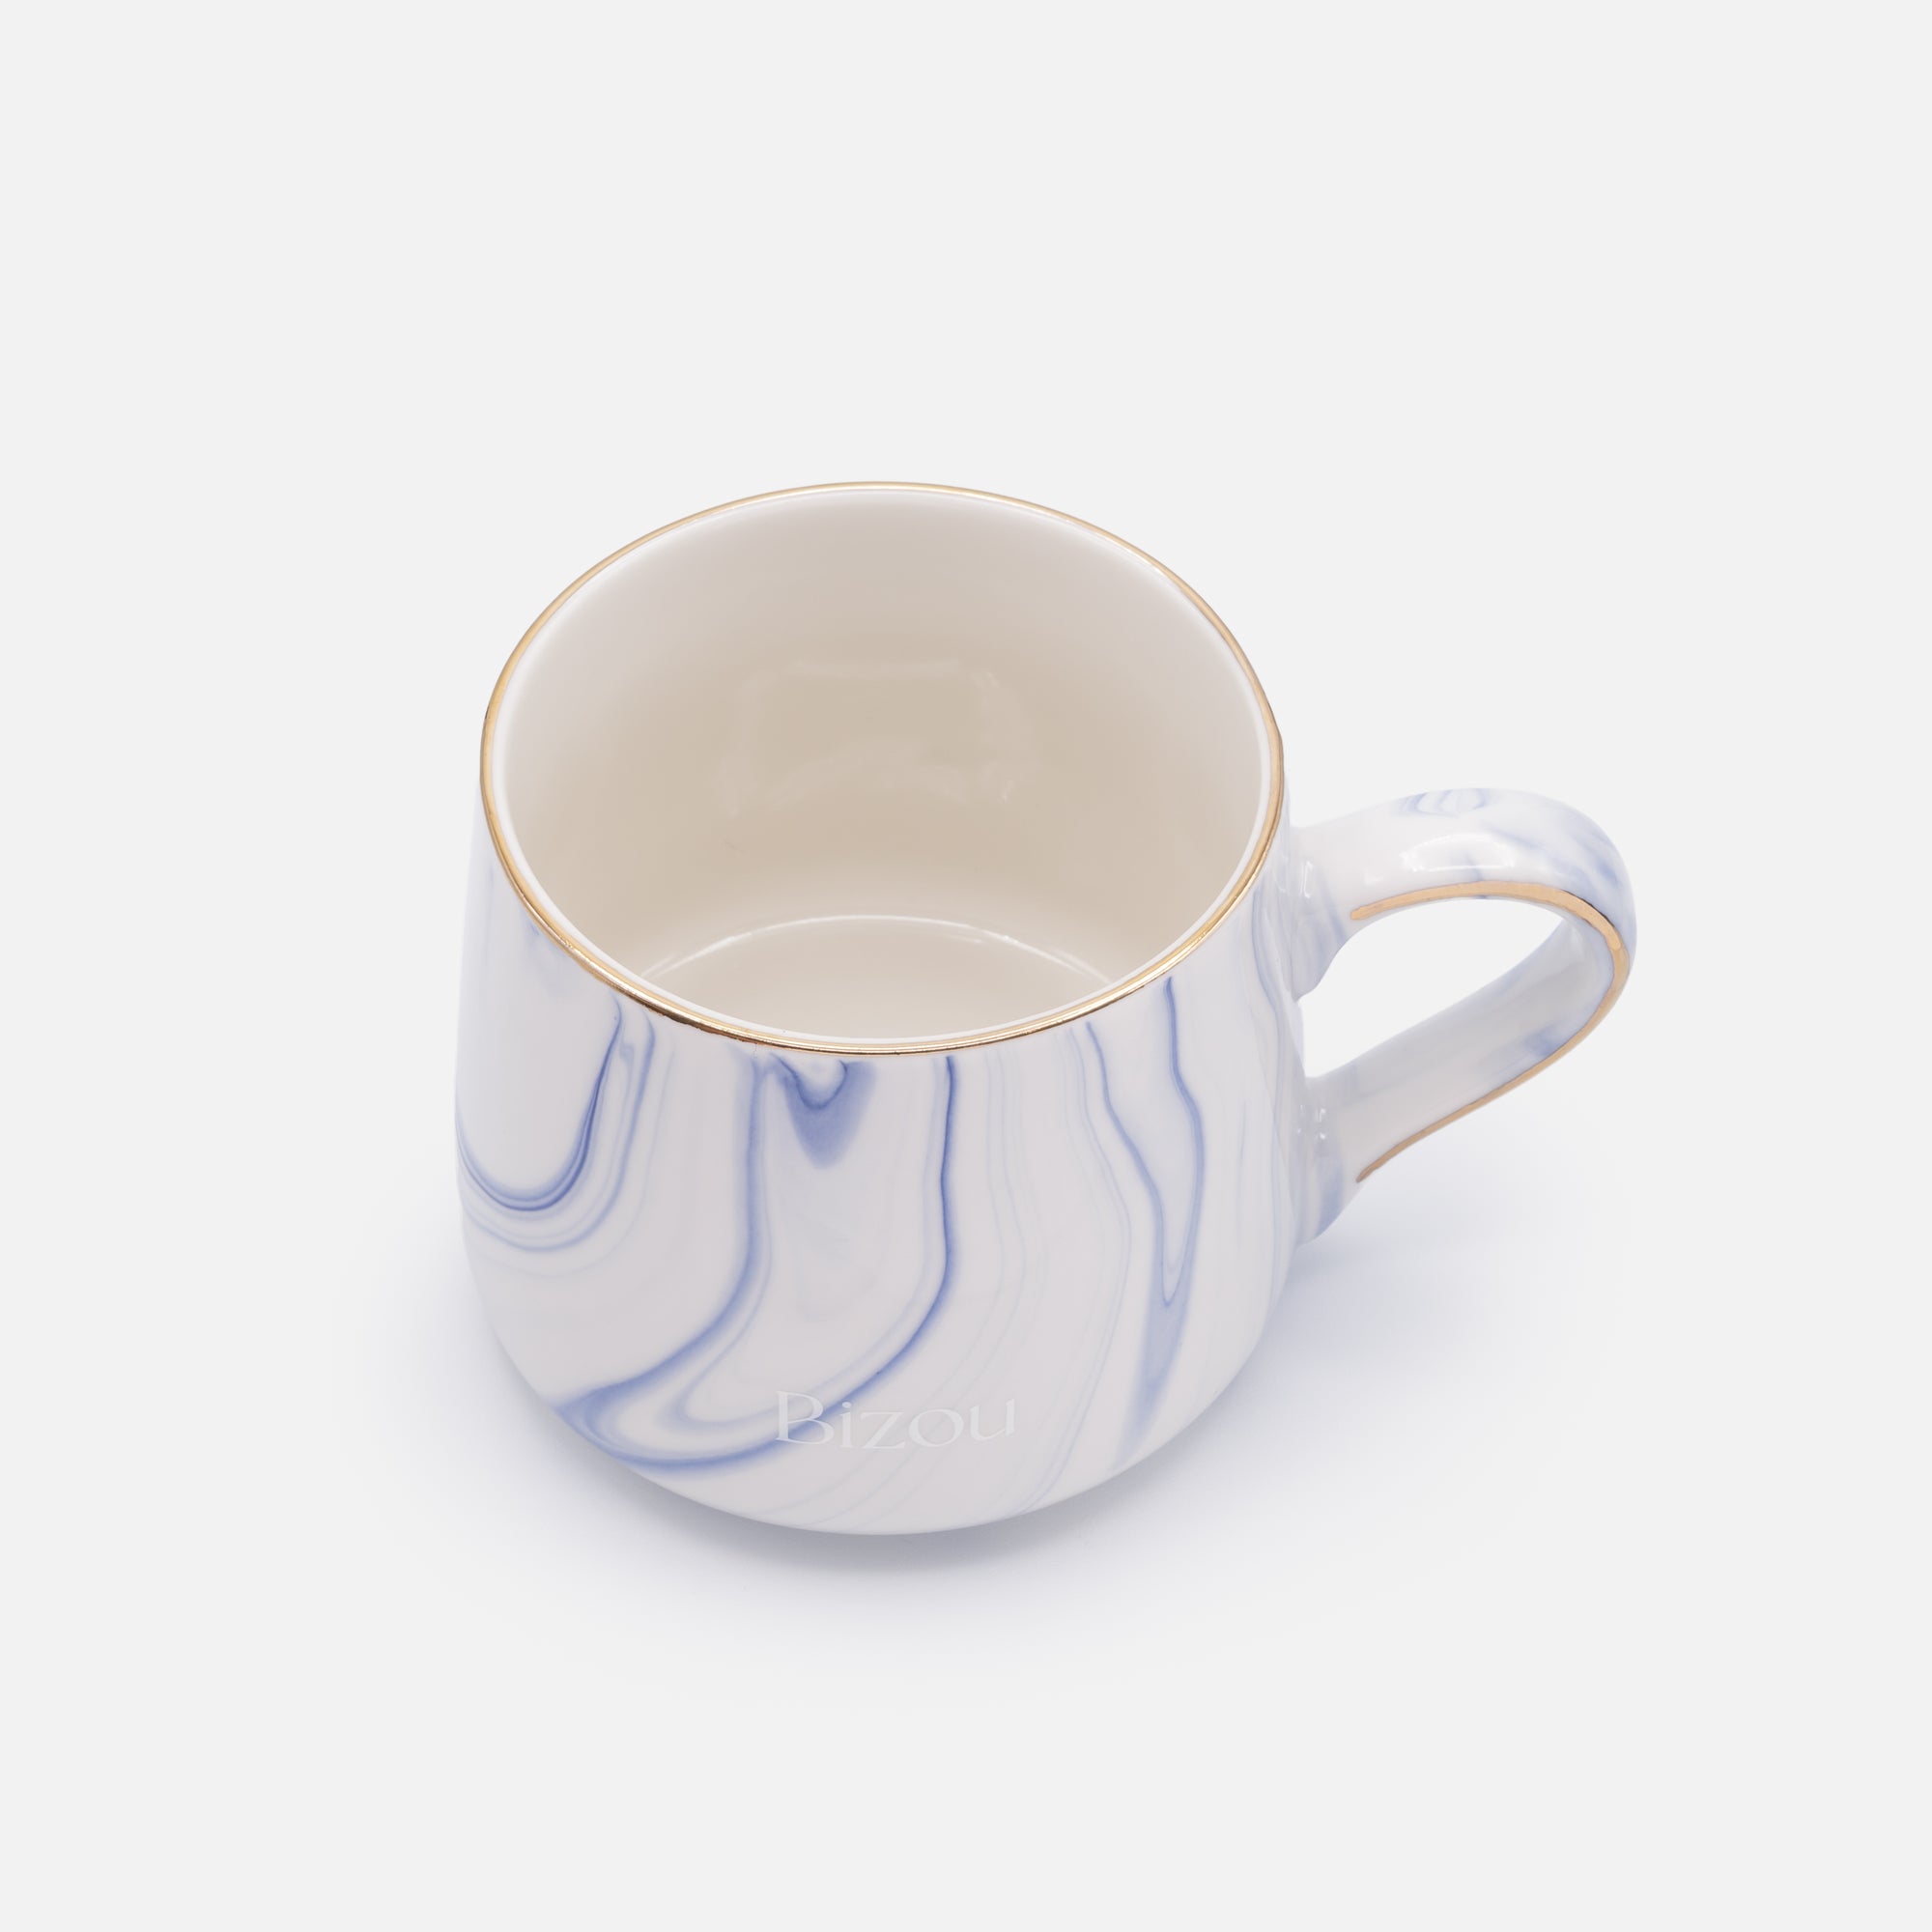 White ceramic mug with blue marbling